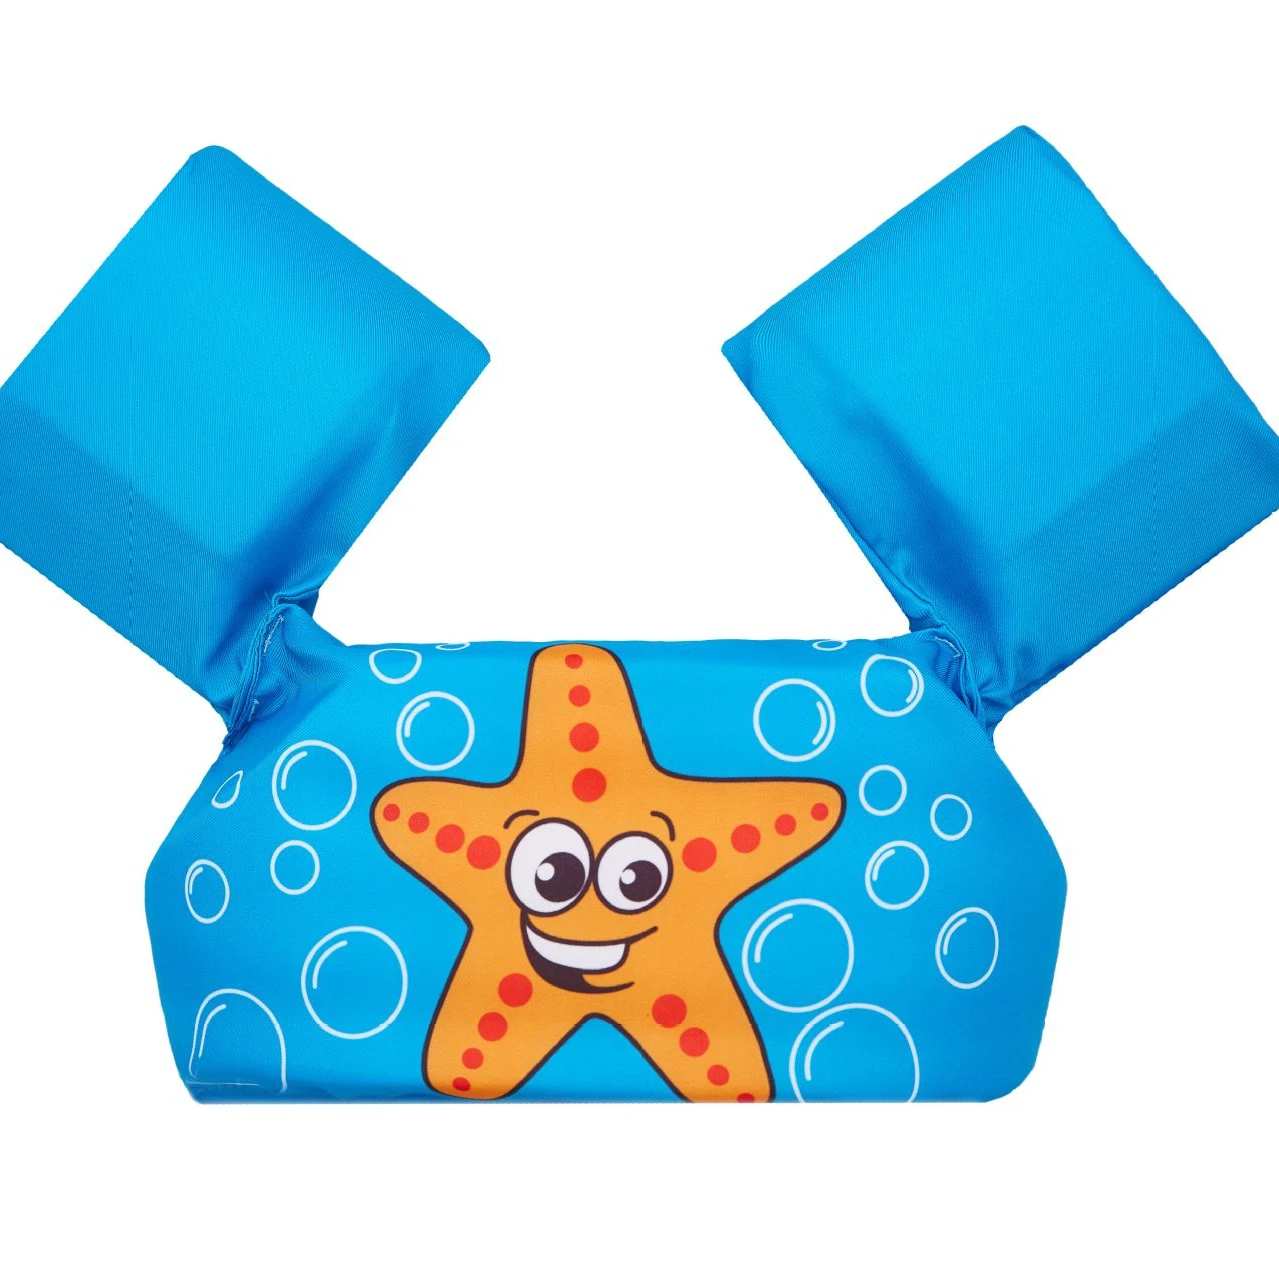 New Original Puddle Jumper Kids Water Swimming Life Jacket Life Vest for Children (1600438699303)